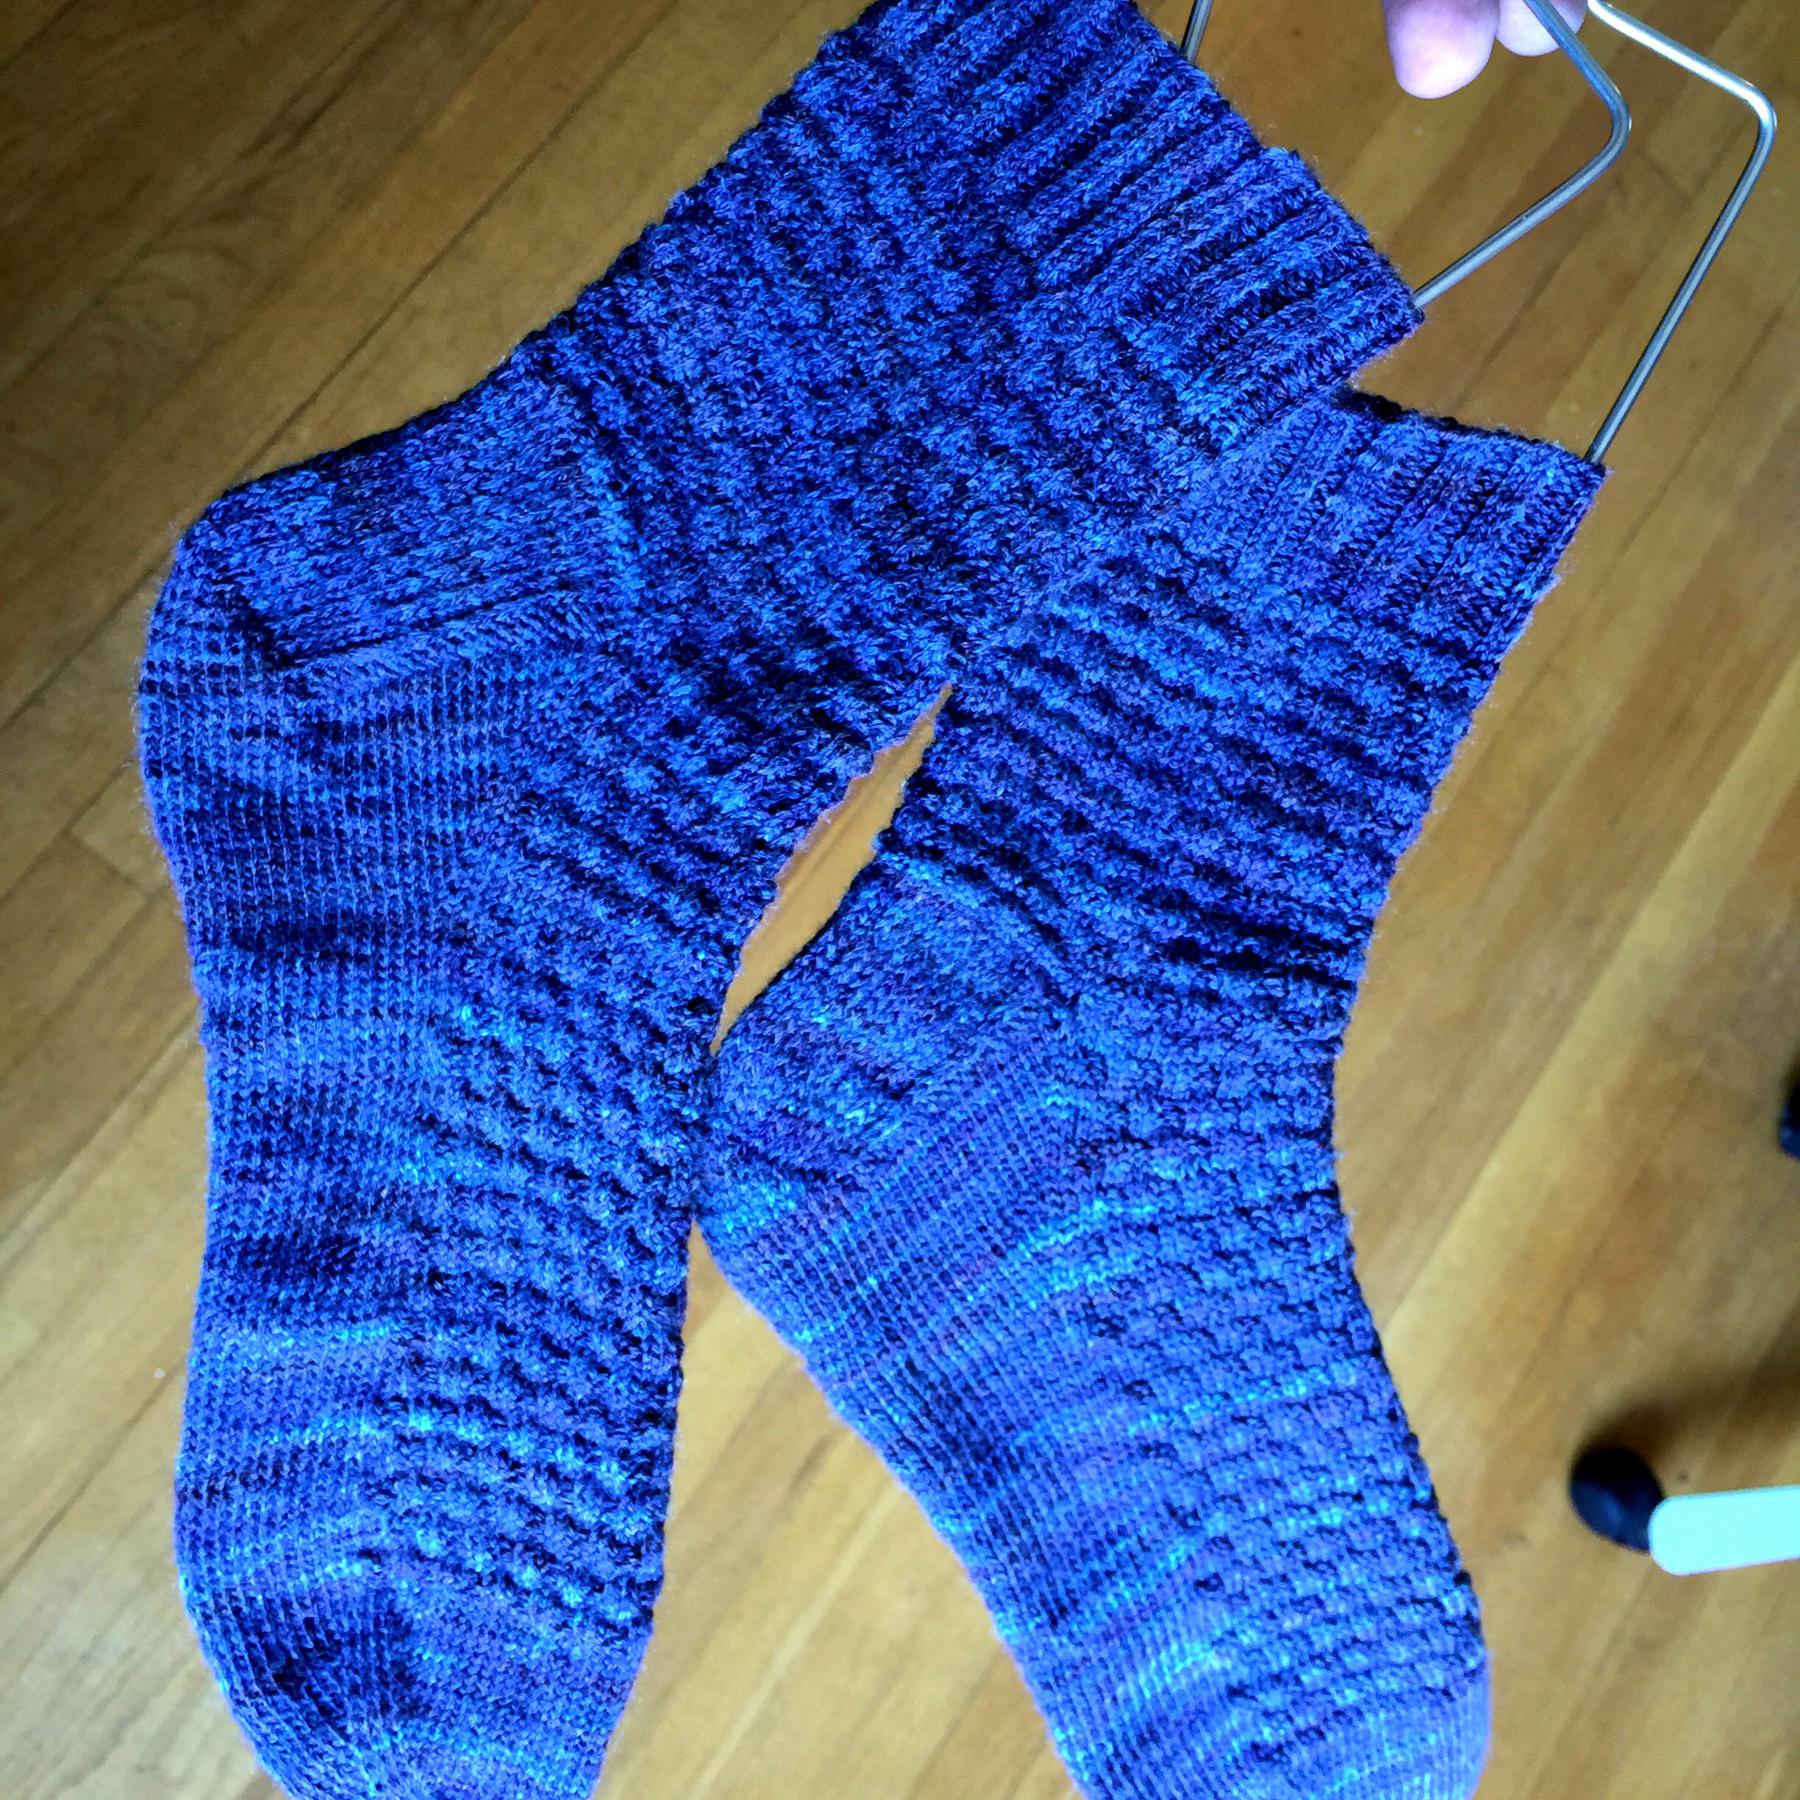 finished socks on sock hangers